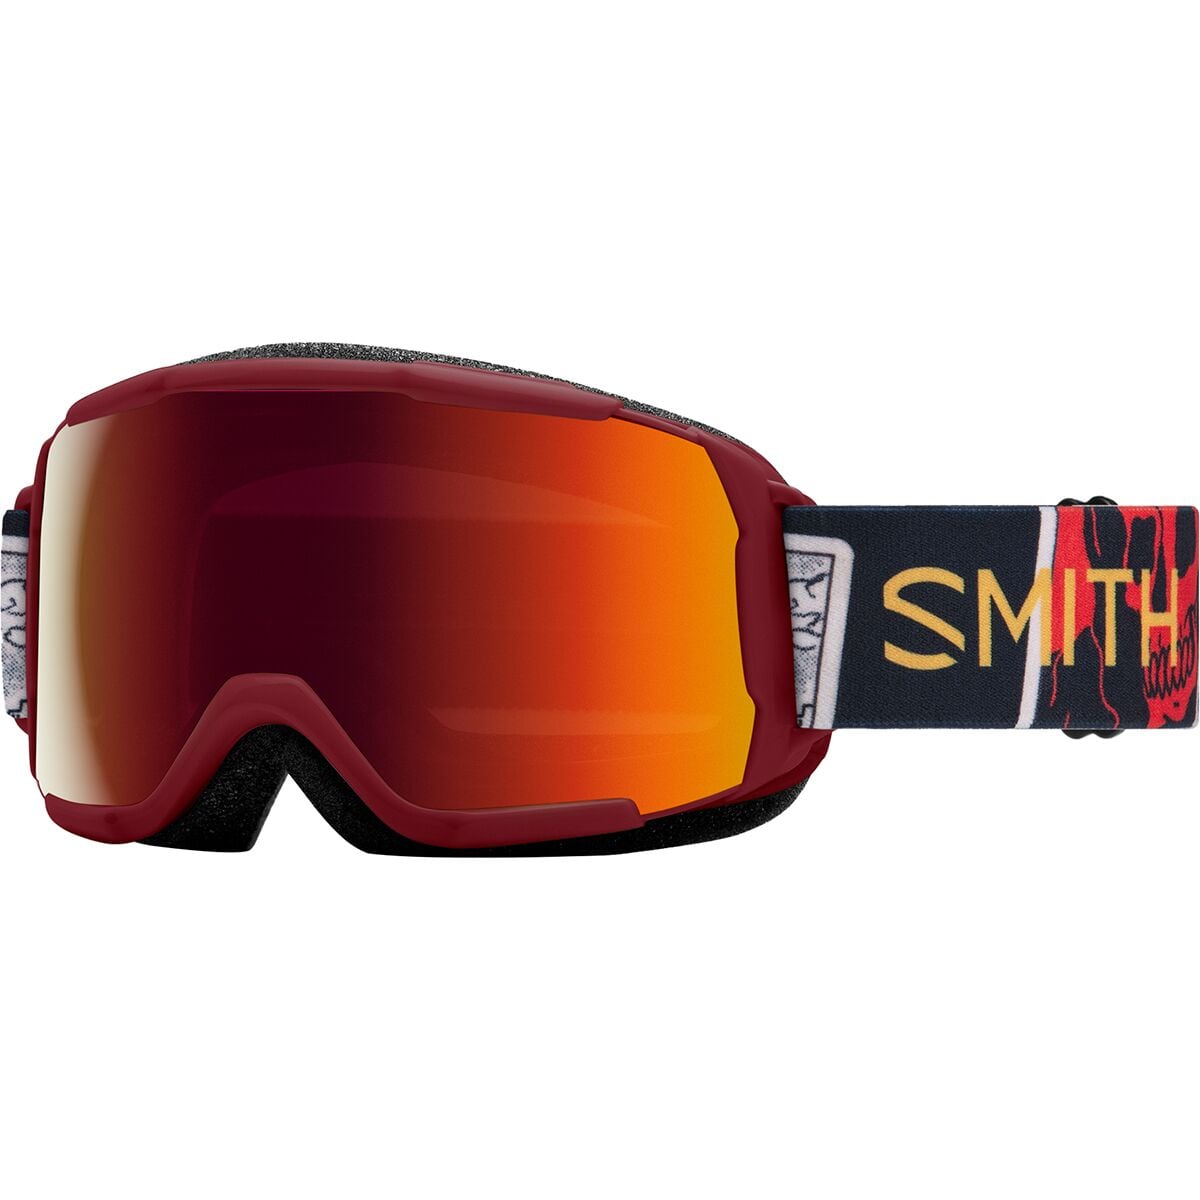 Smith Grom ChromaPop Goggles - Kids' Sangria Fortune Teller/Red Sol-X Mirror